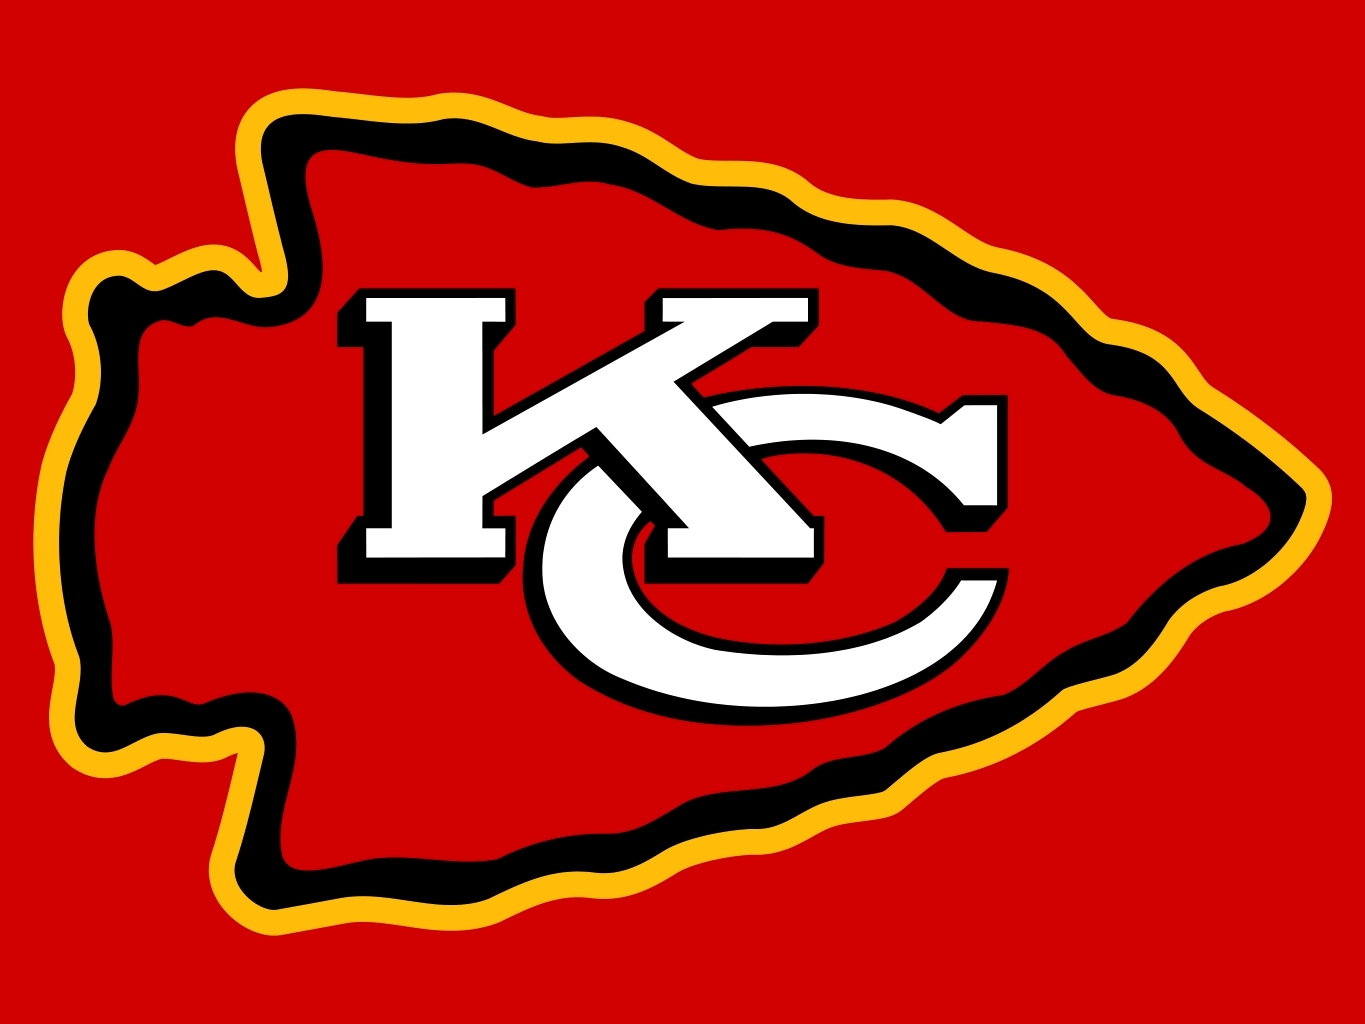 Kansas City Chiefs retire its horse mascot, Warpaint